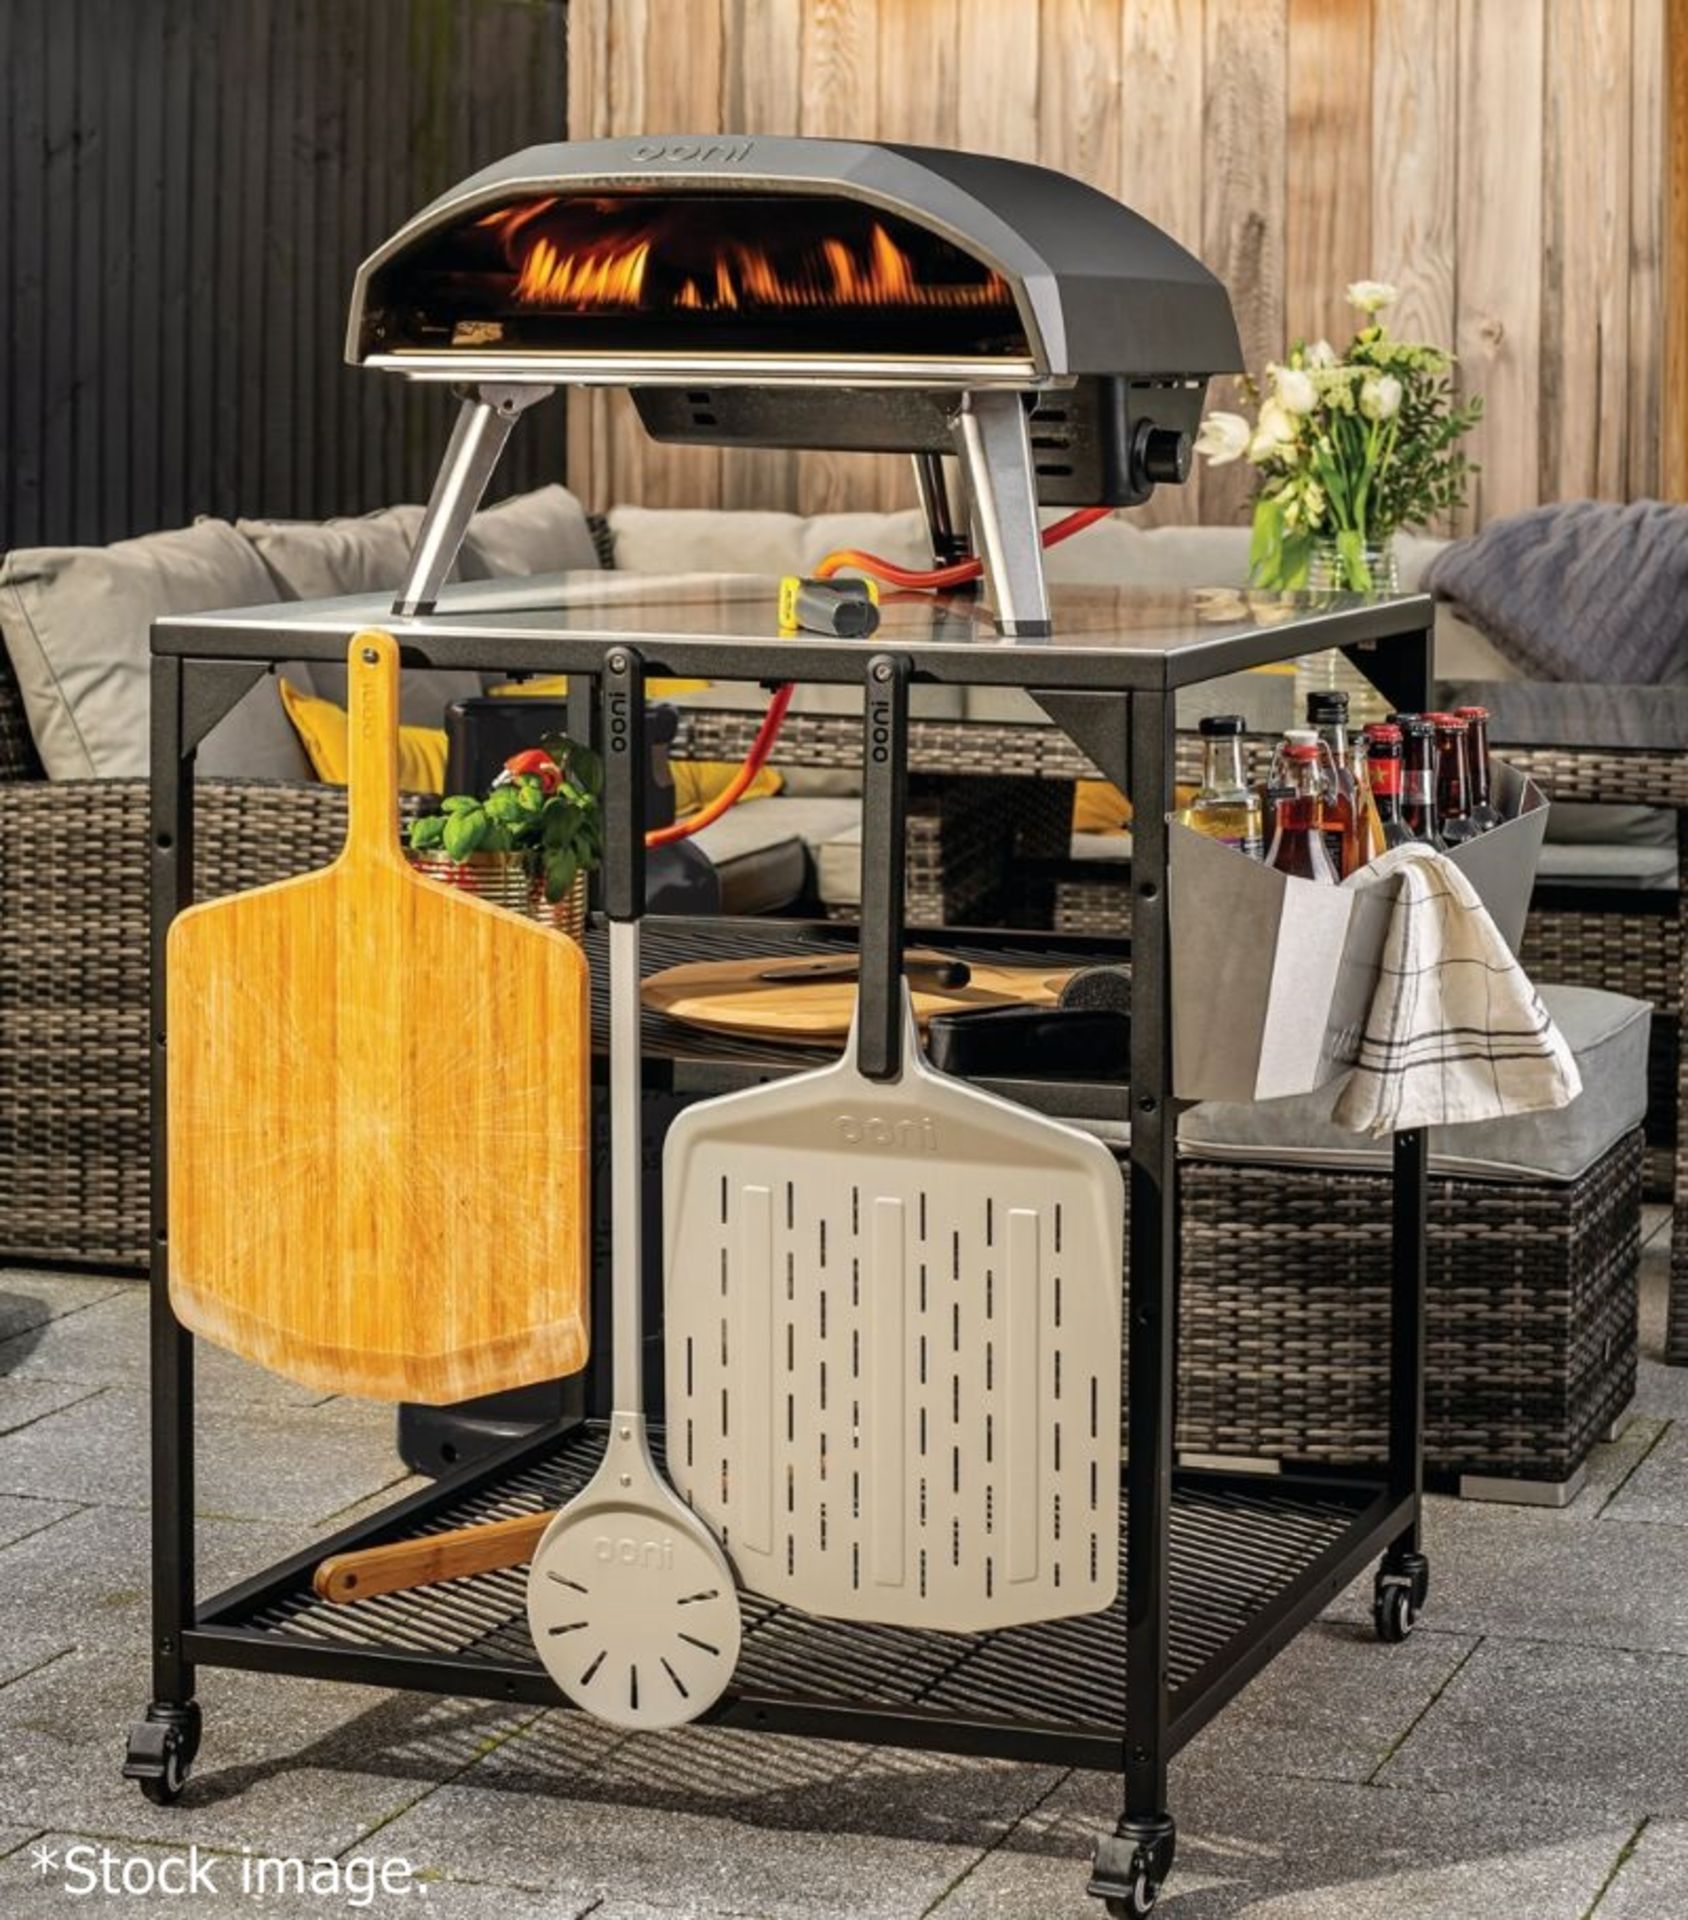 1 x OONI Large Premium Modular Outdoor Kitchen Table On Castors - Original Price £279.00 - Ref: